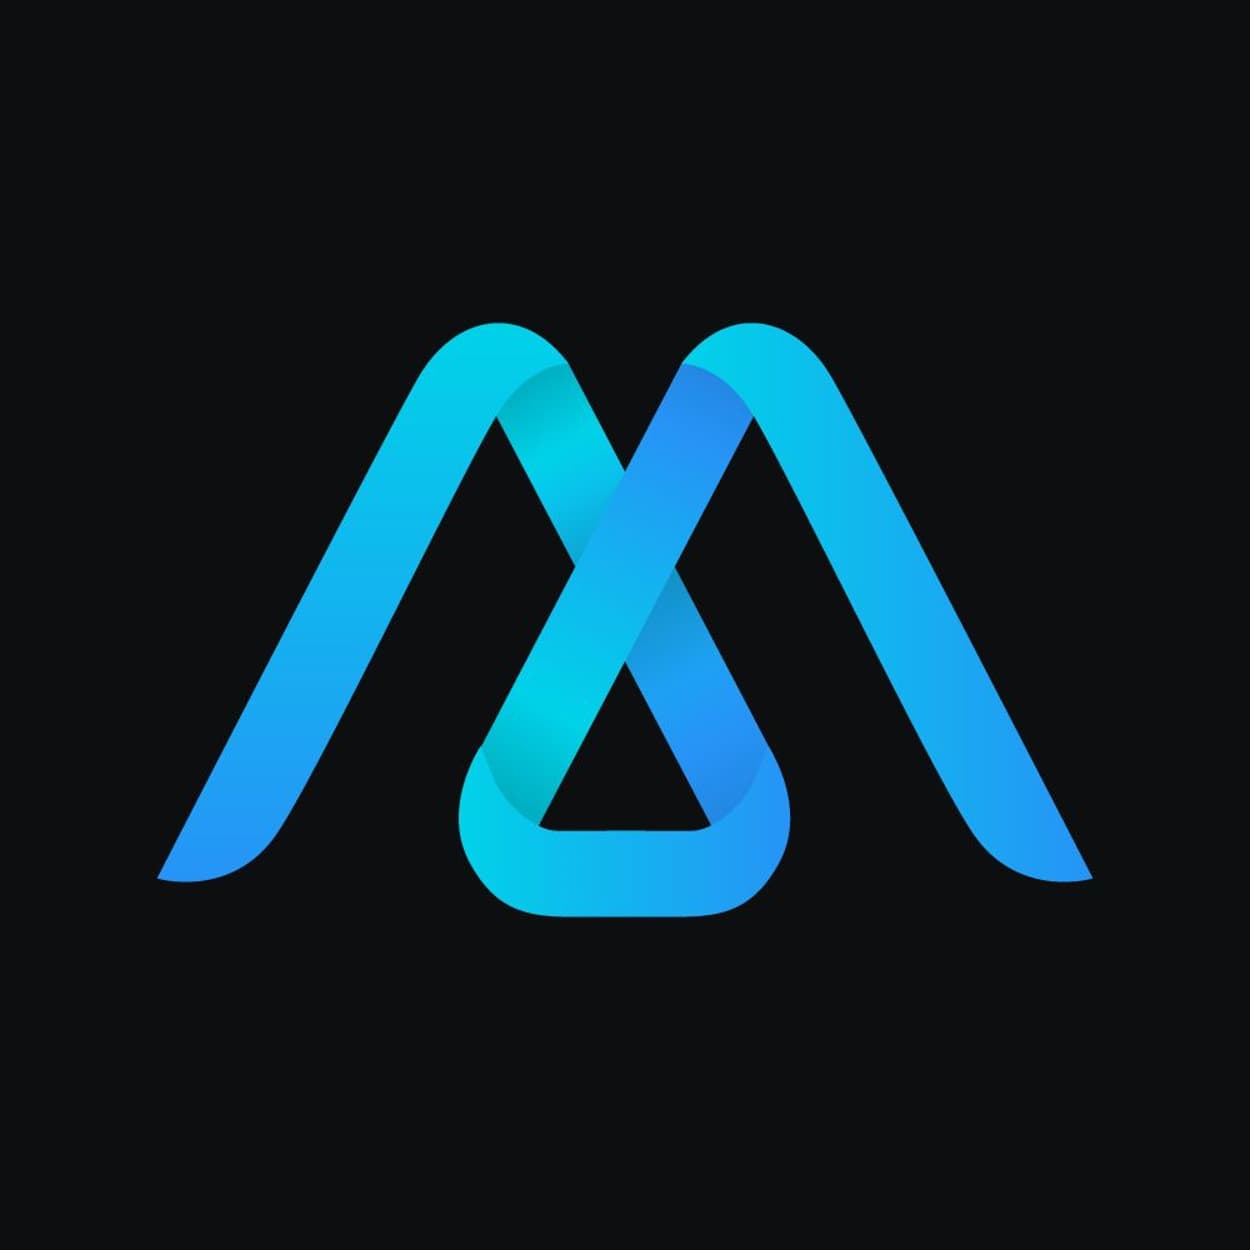 MoneyyApp's logo